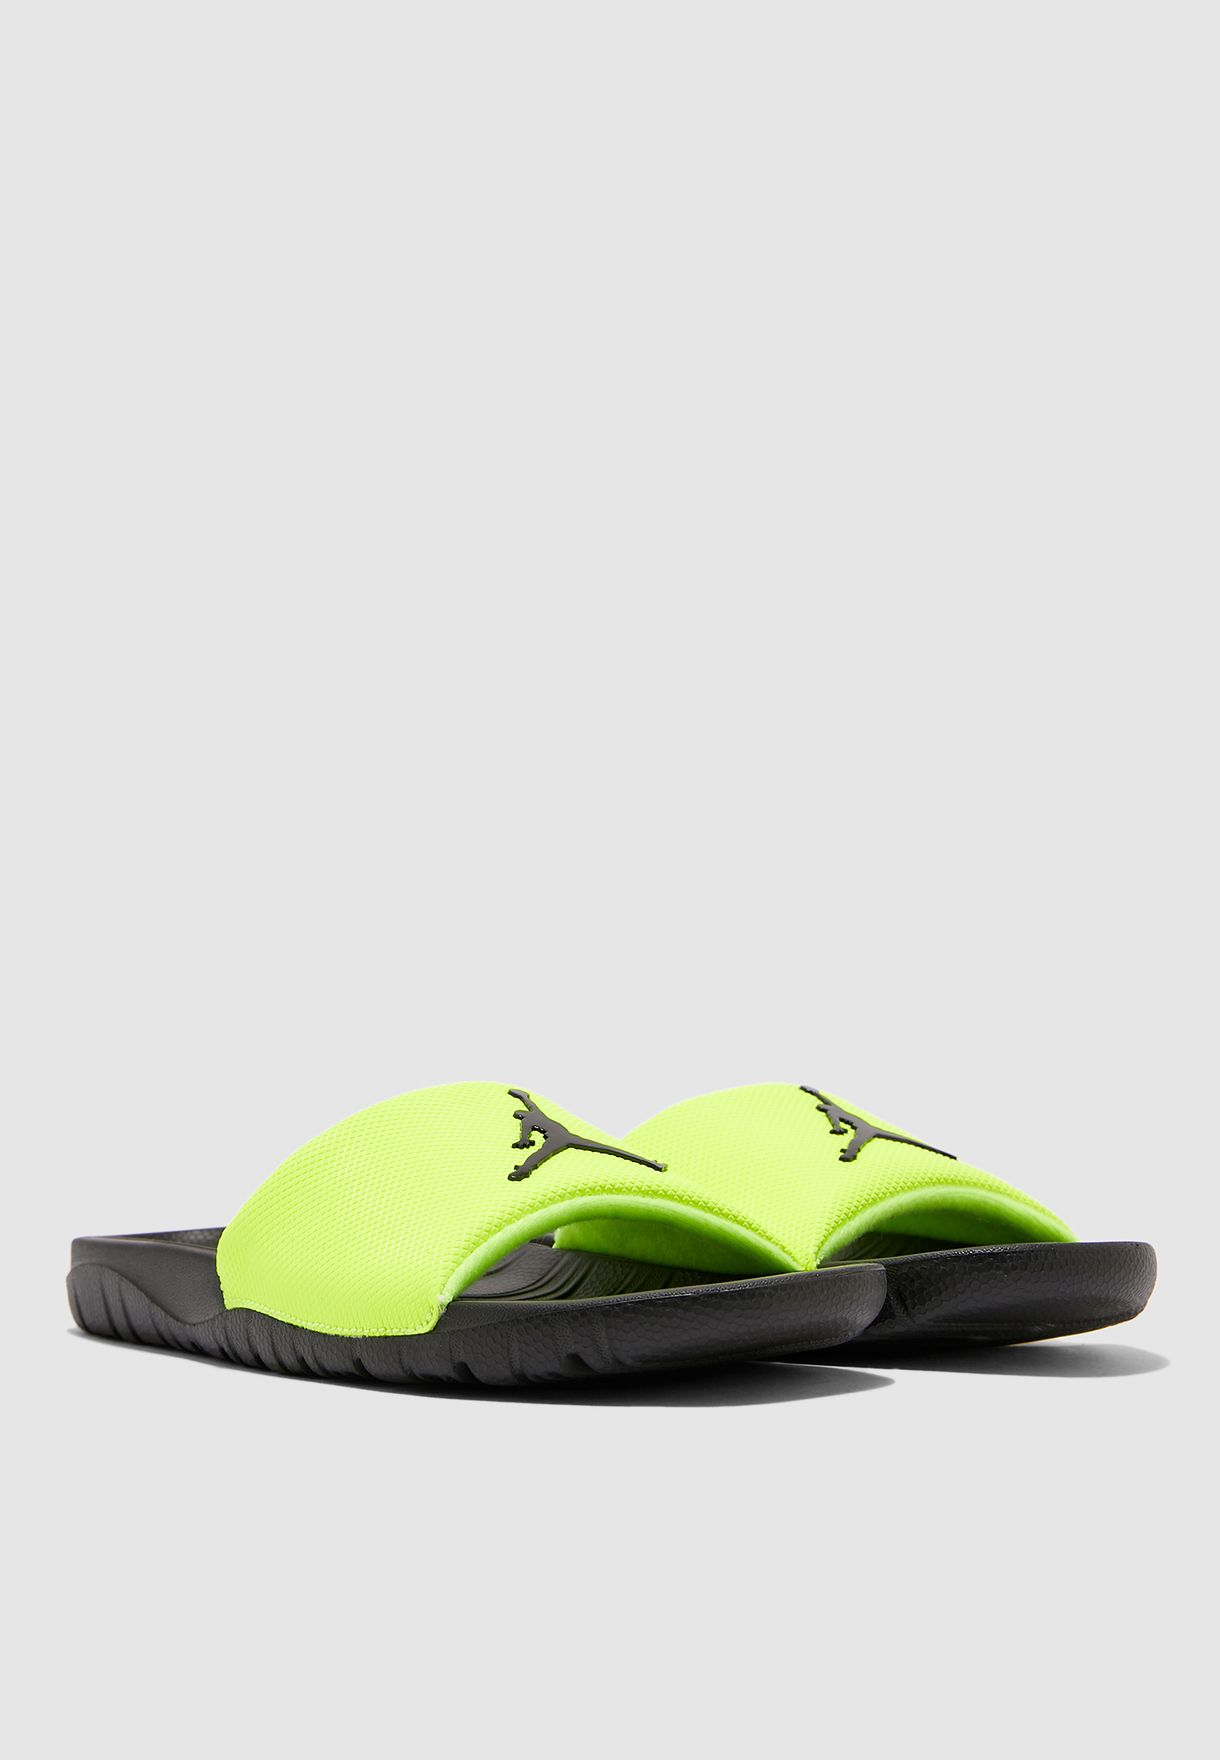 nike neon green flip flops